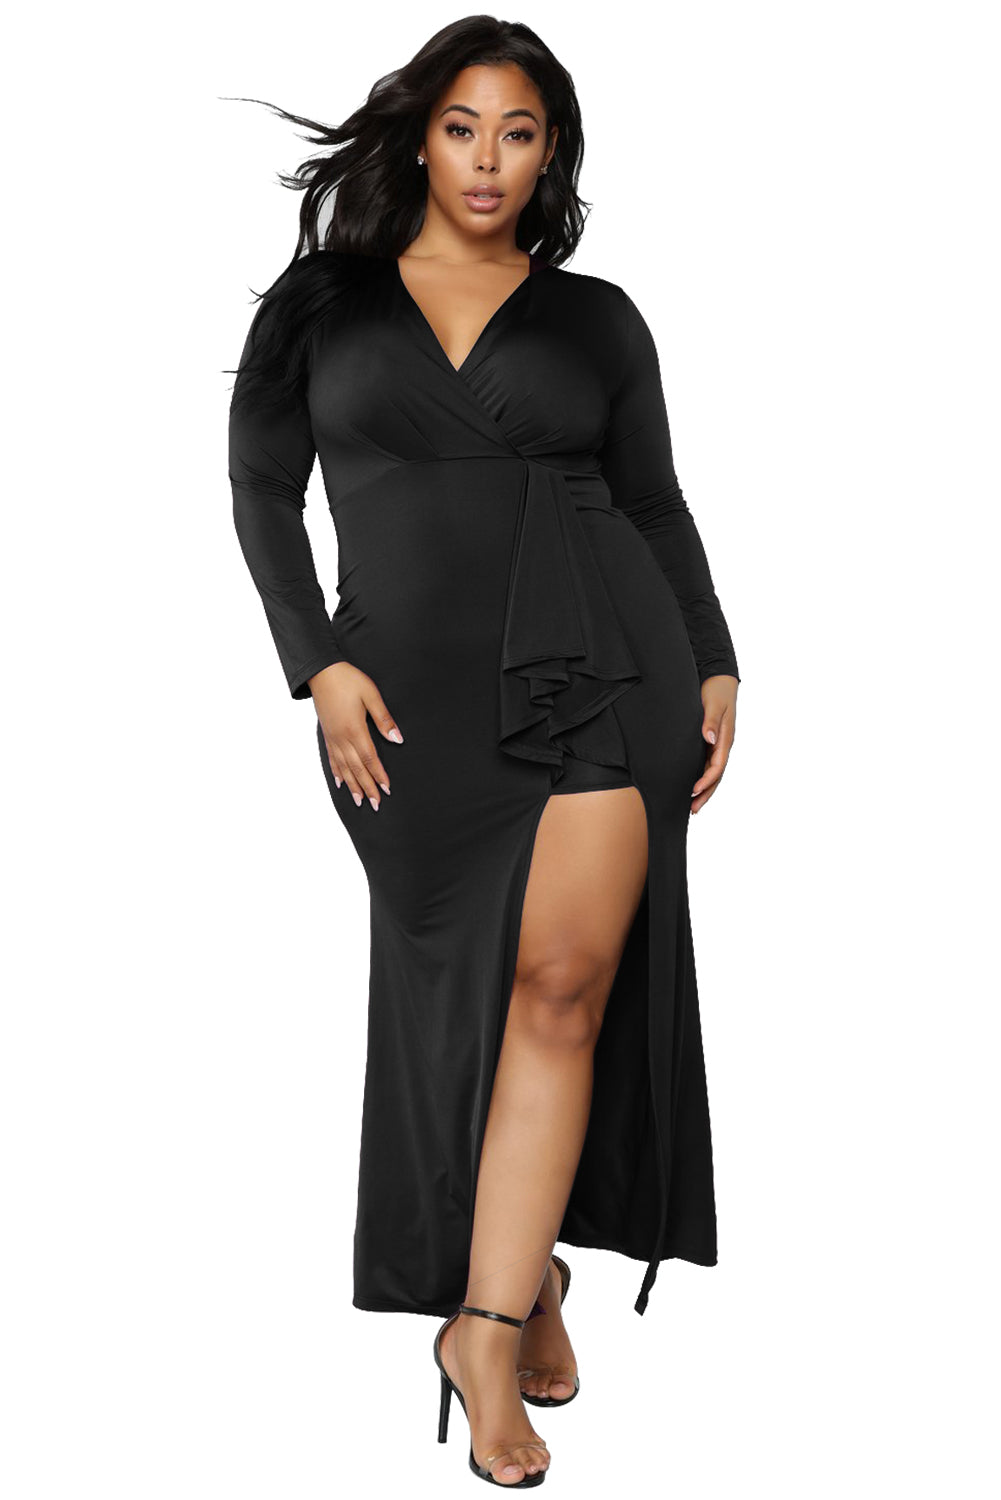 Black Surplice Long Sleeve Plus Size Dress